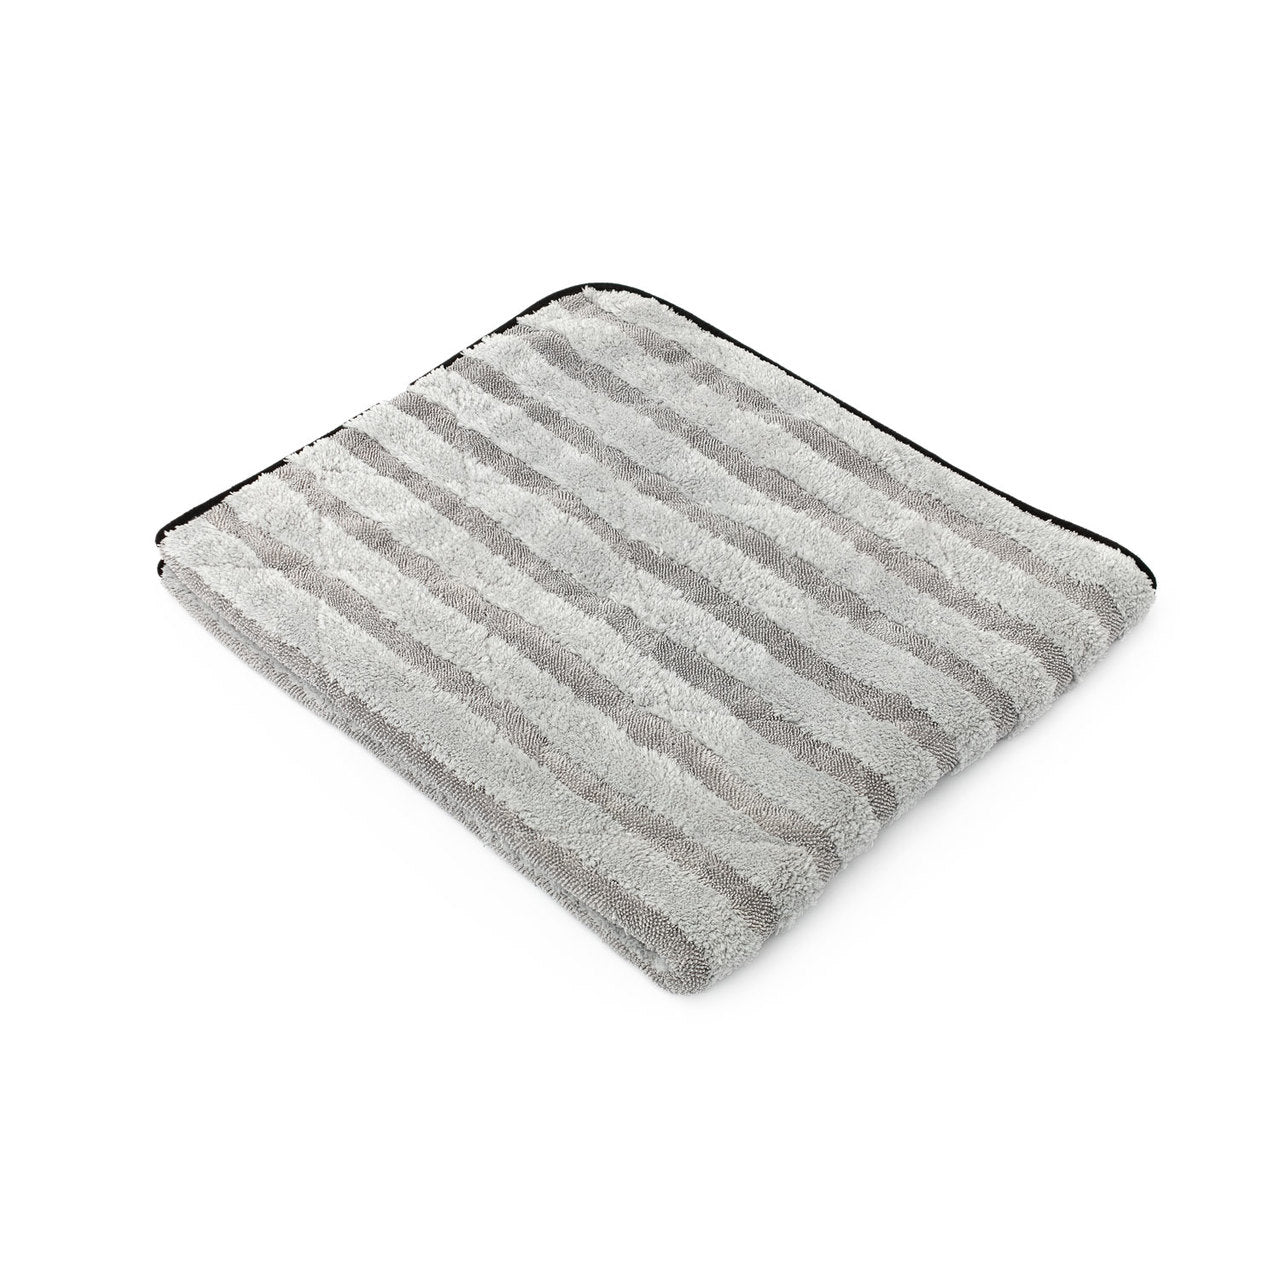 THE RAG COMPANY - The 1500 Drying Towel (Drying Microfiber